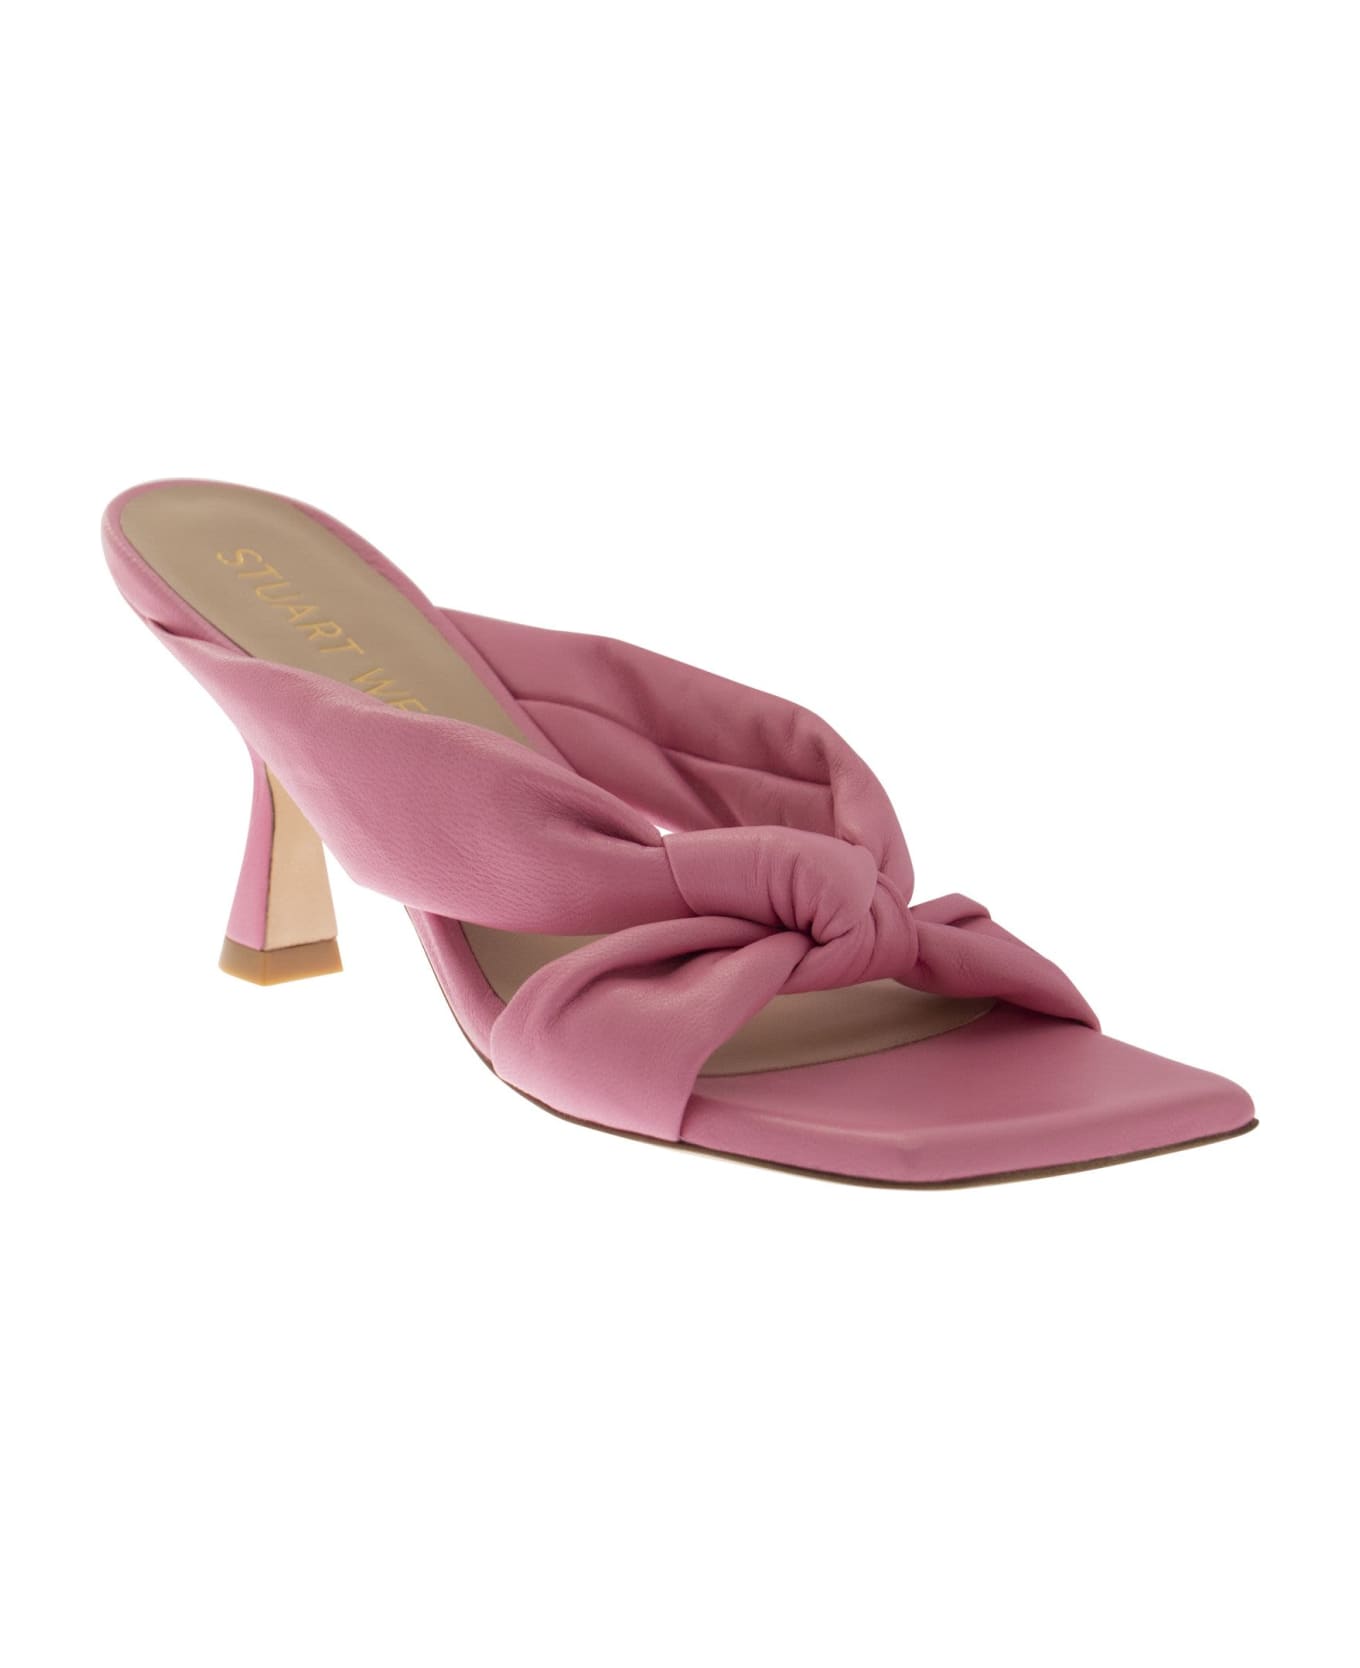 Stuart Weitzman Playa - Leather Sandals - Pink